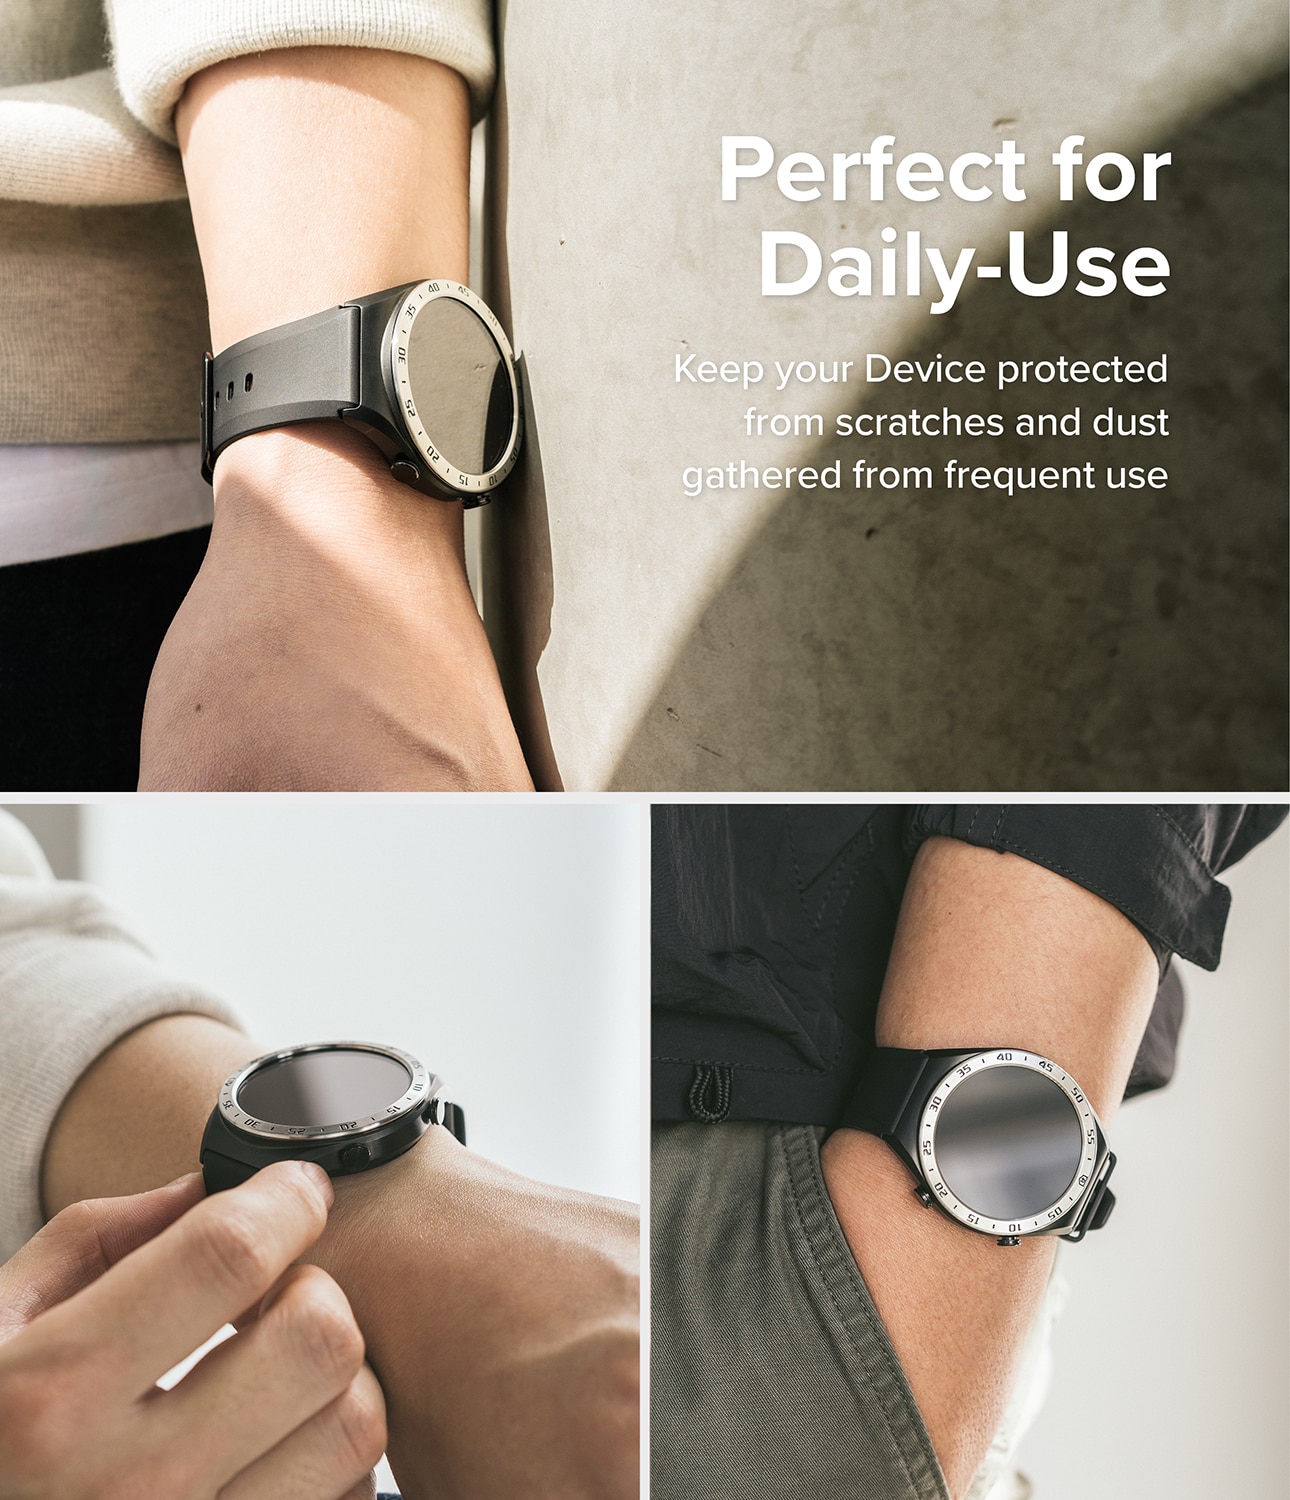 Bezel Styling Xiaomi Watch S1 Argent